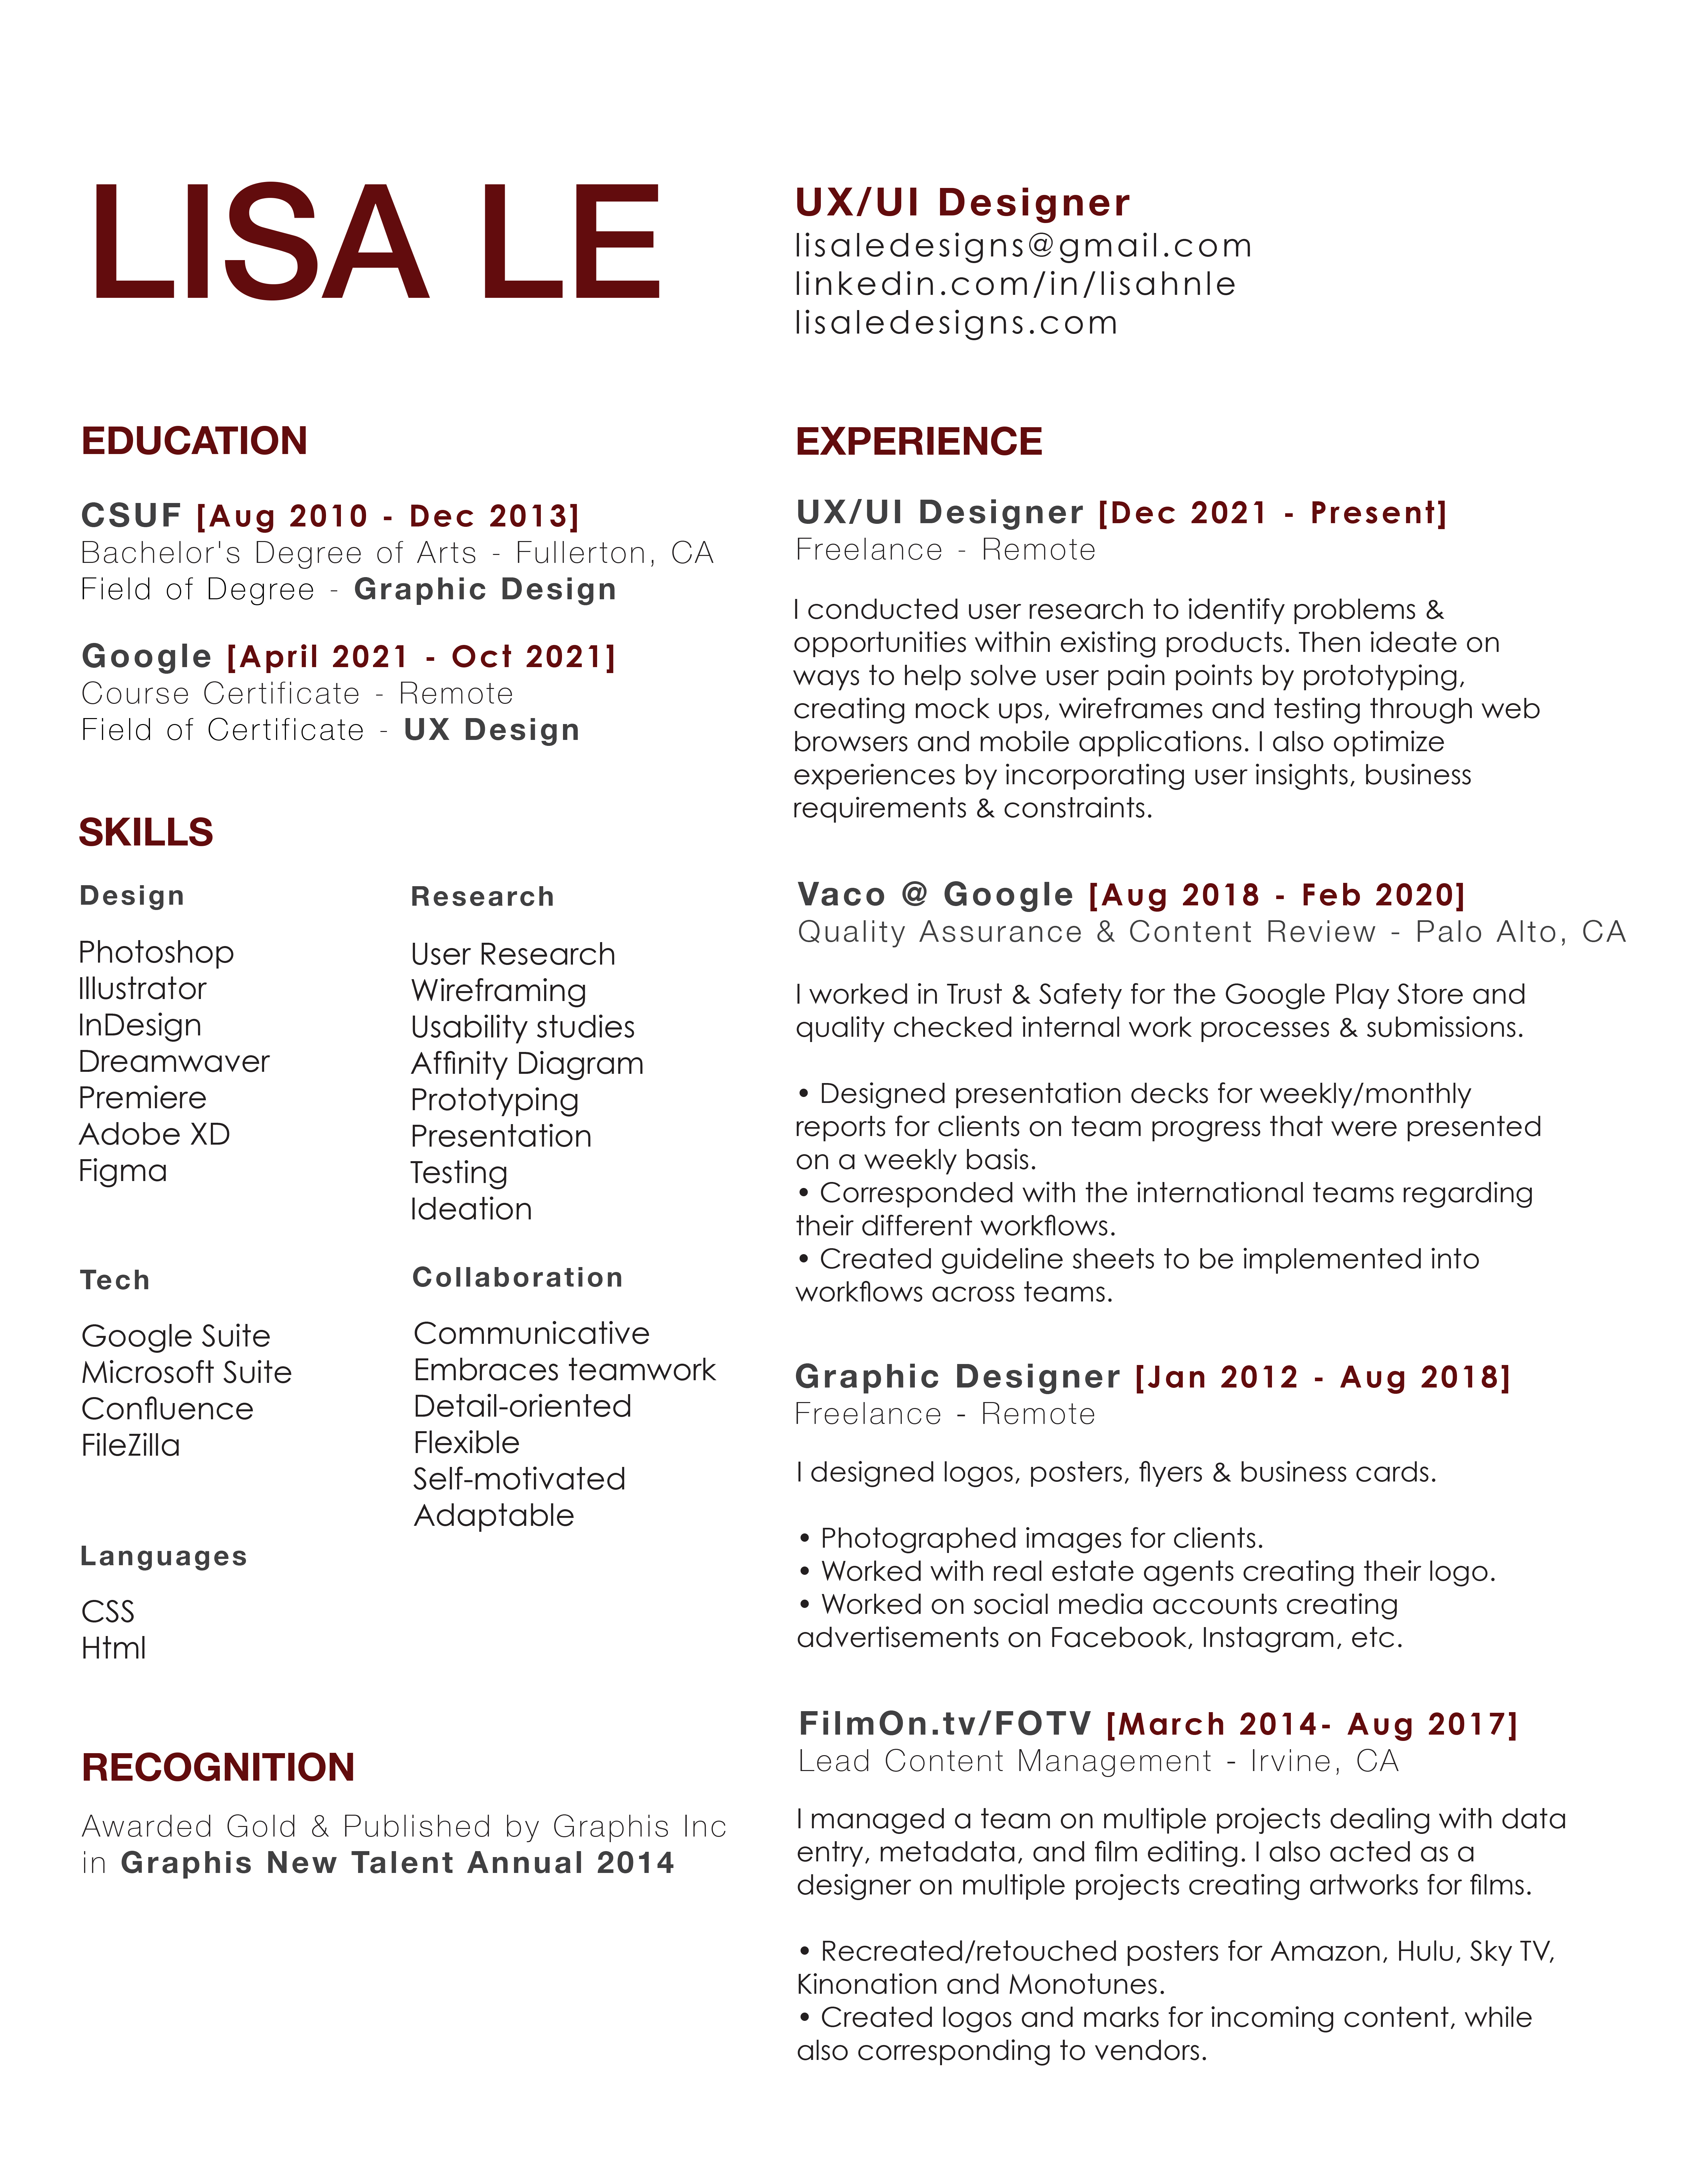 Lisa Le's Resume